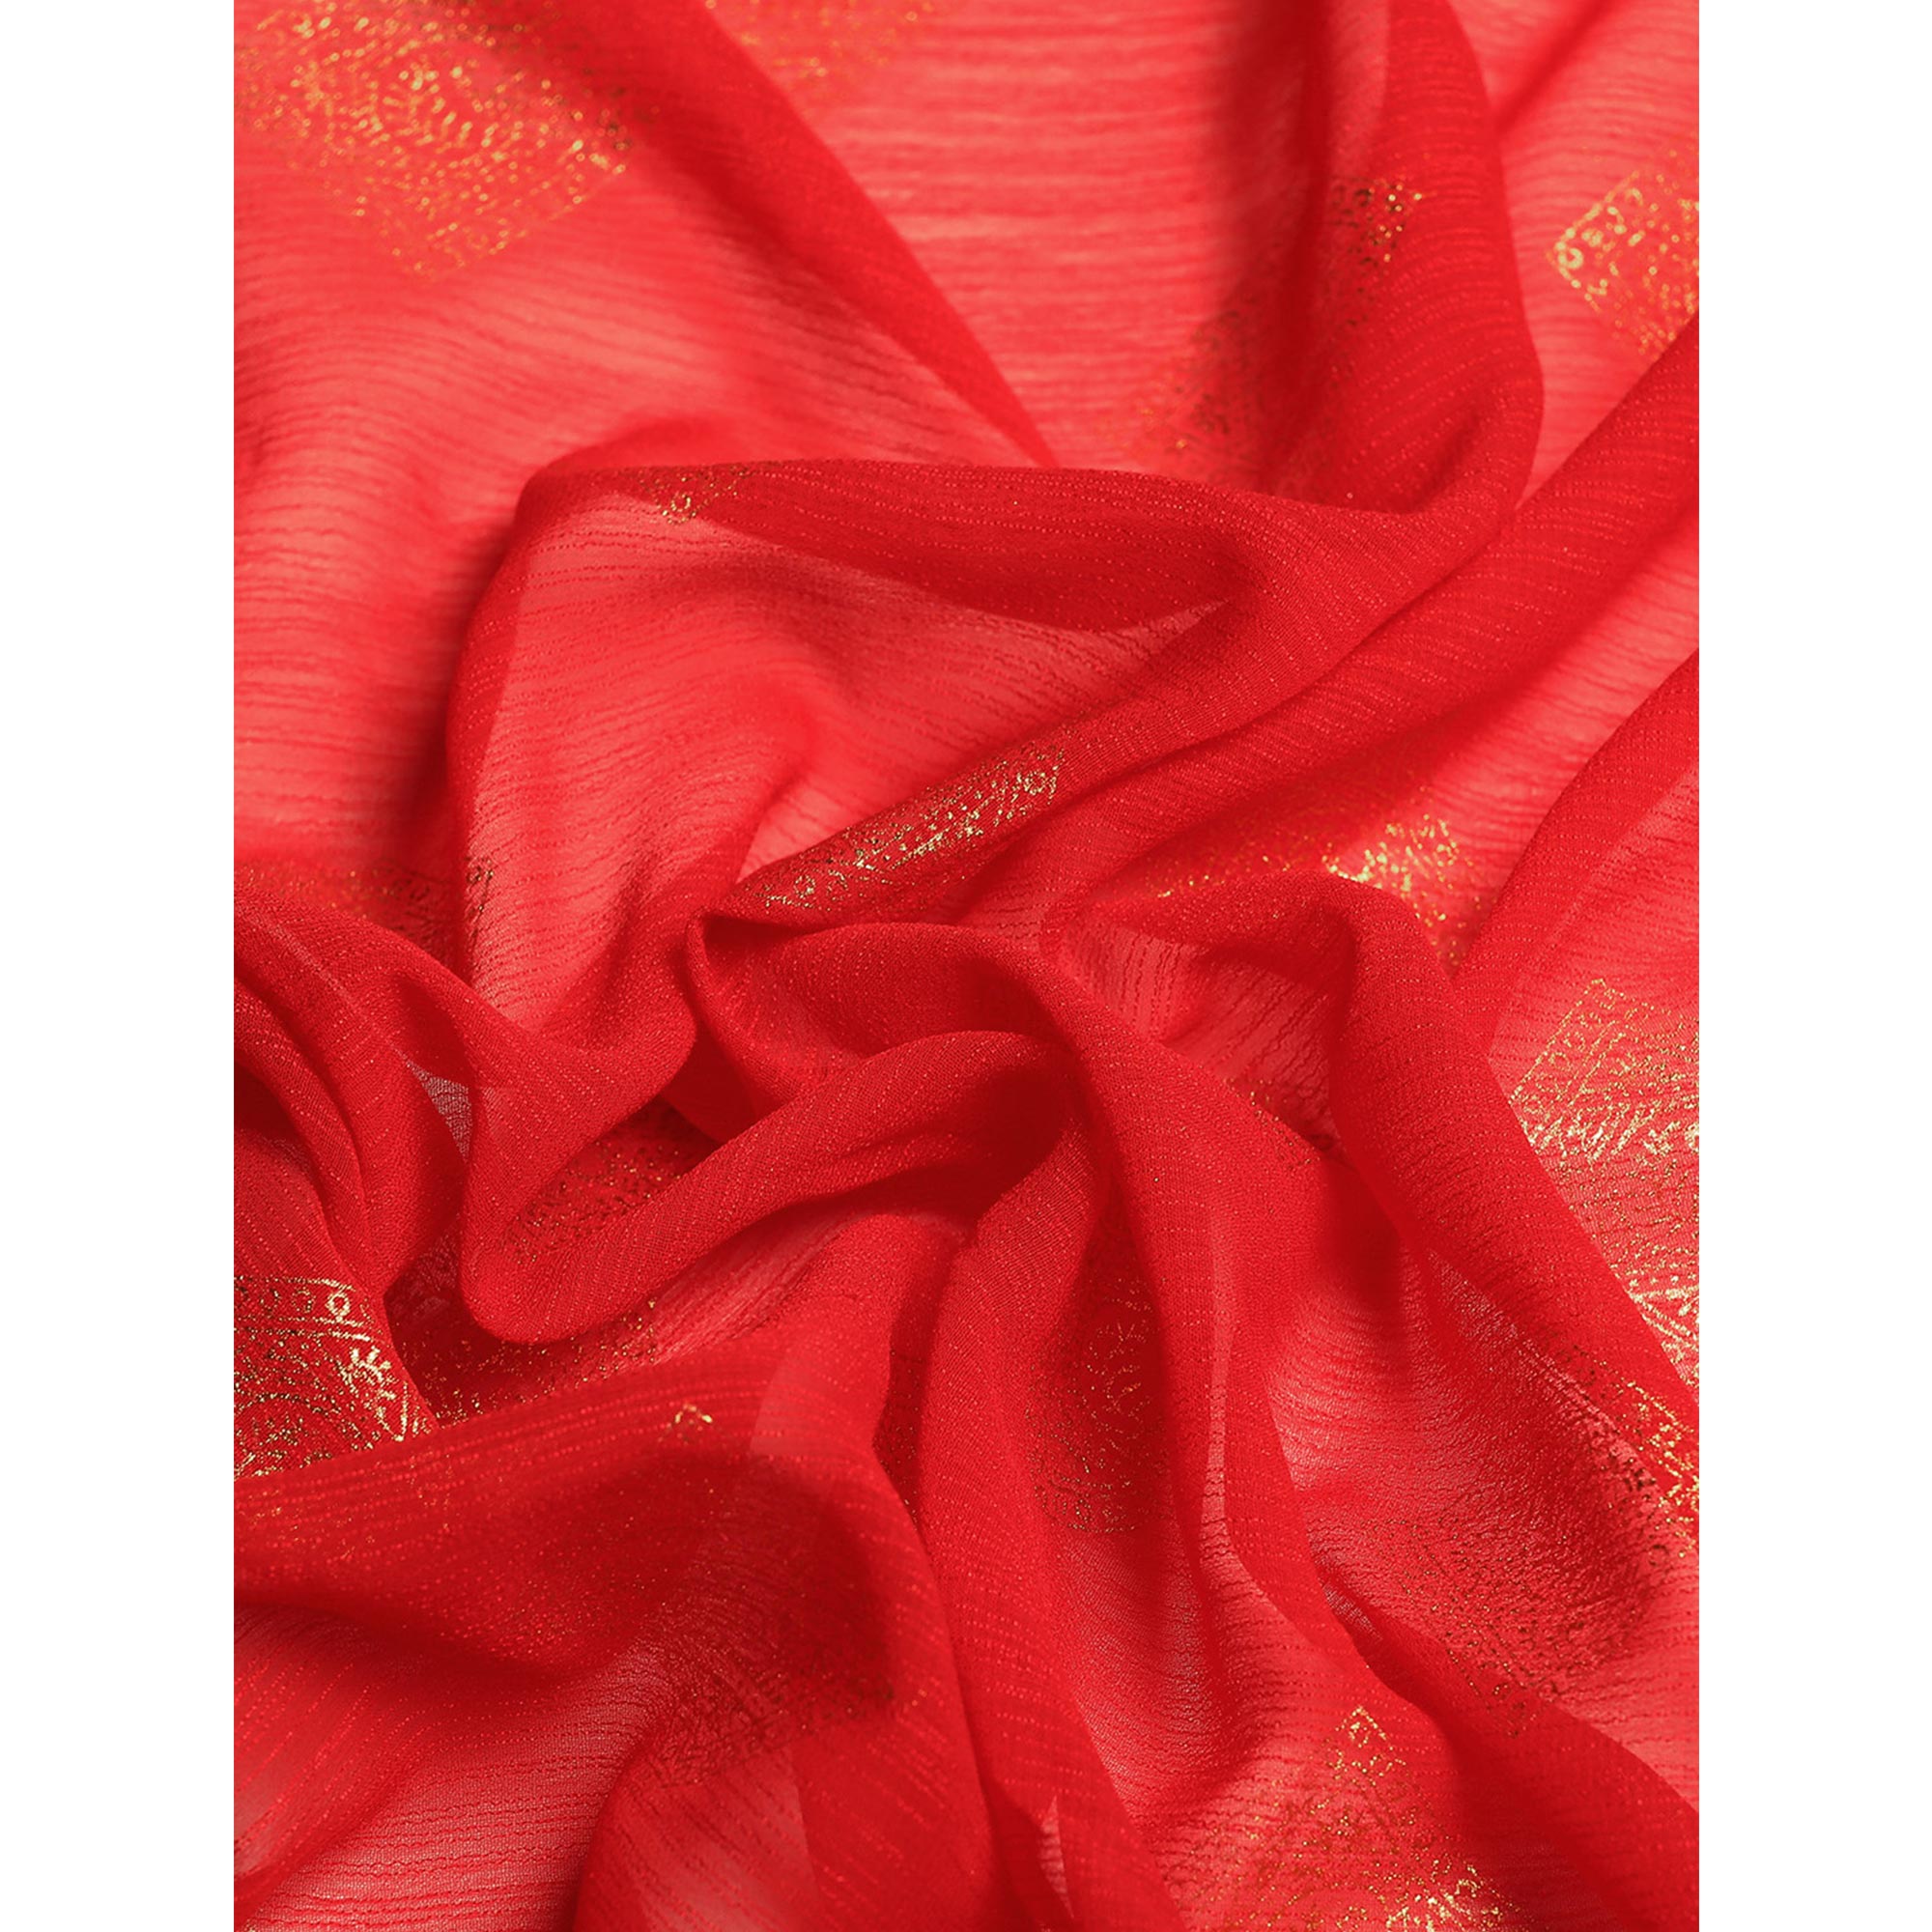 Red Foil Printed Chiffon Saree With Tassels